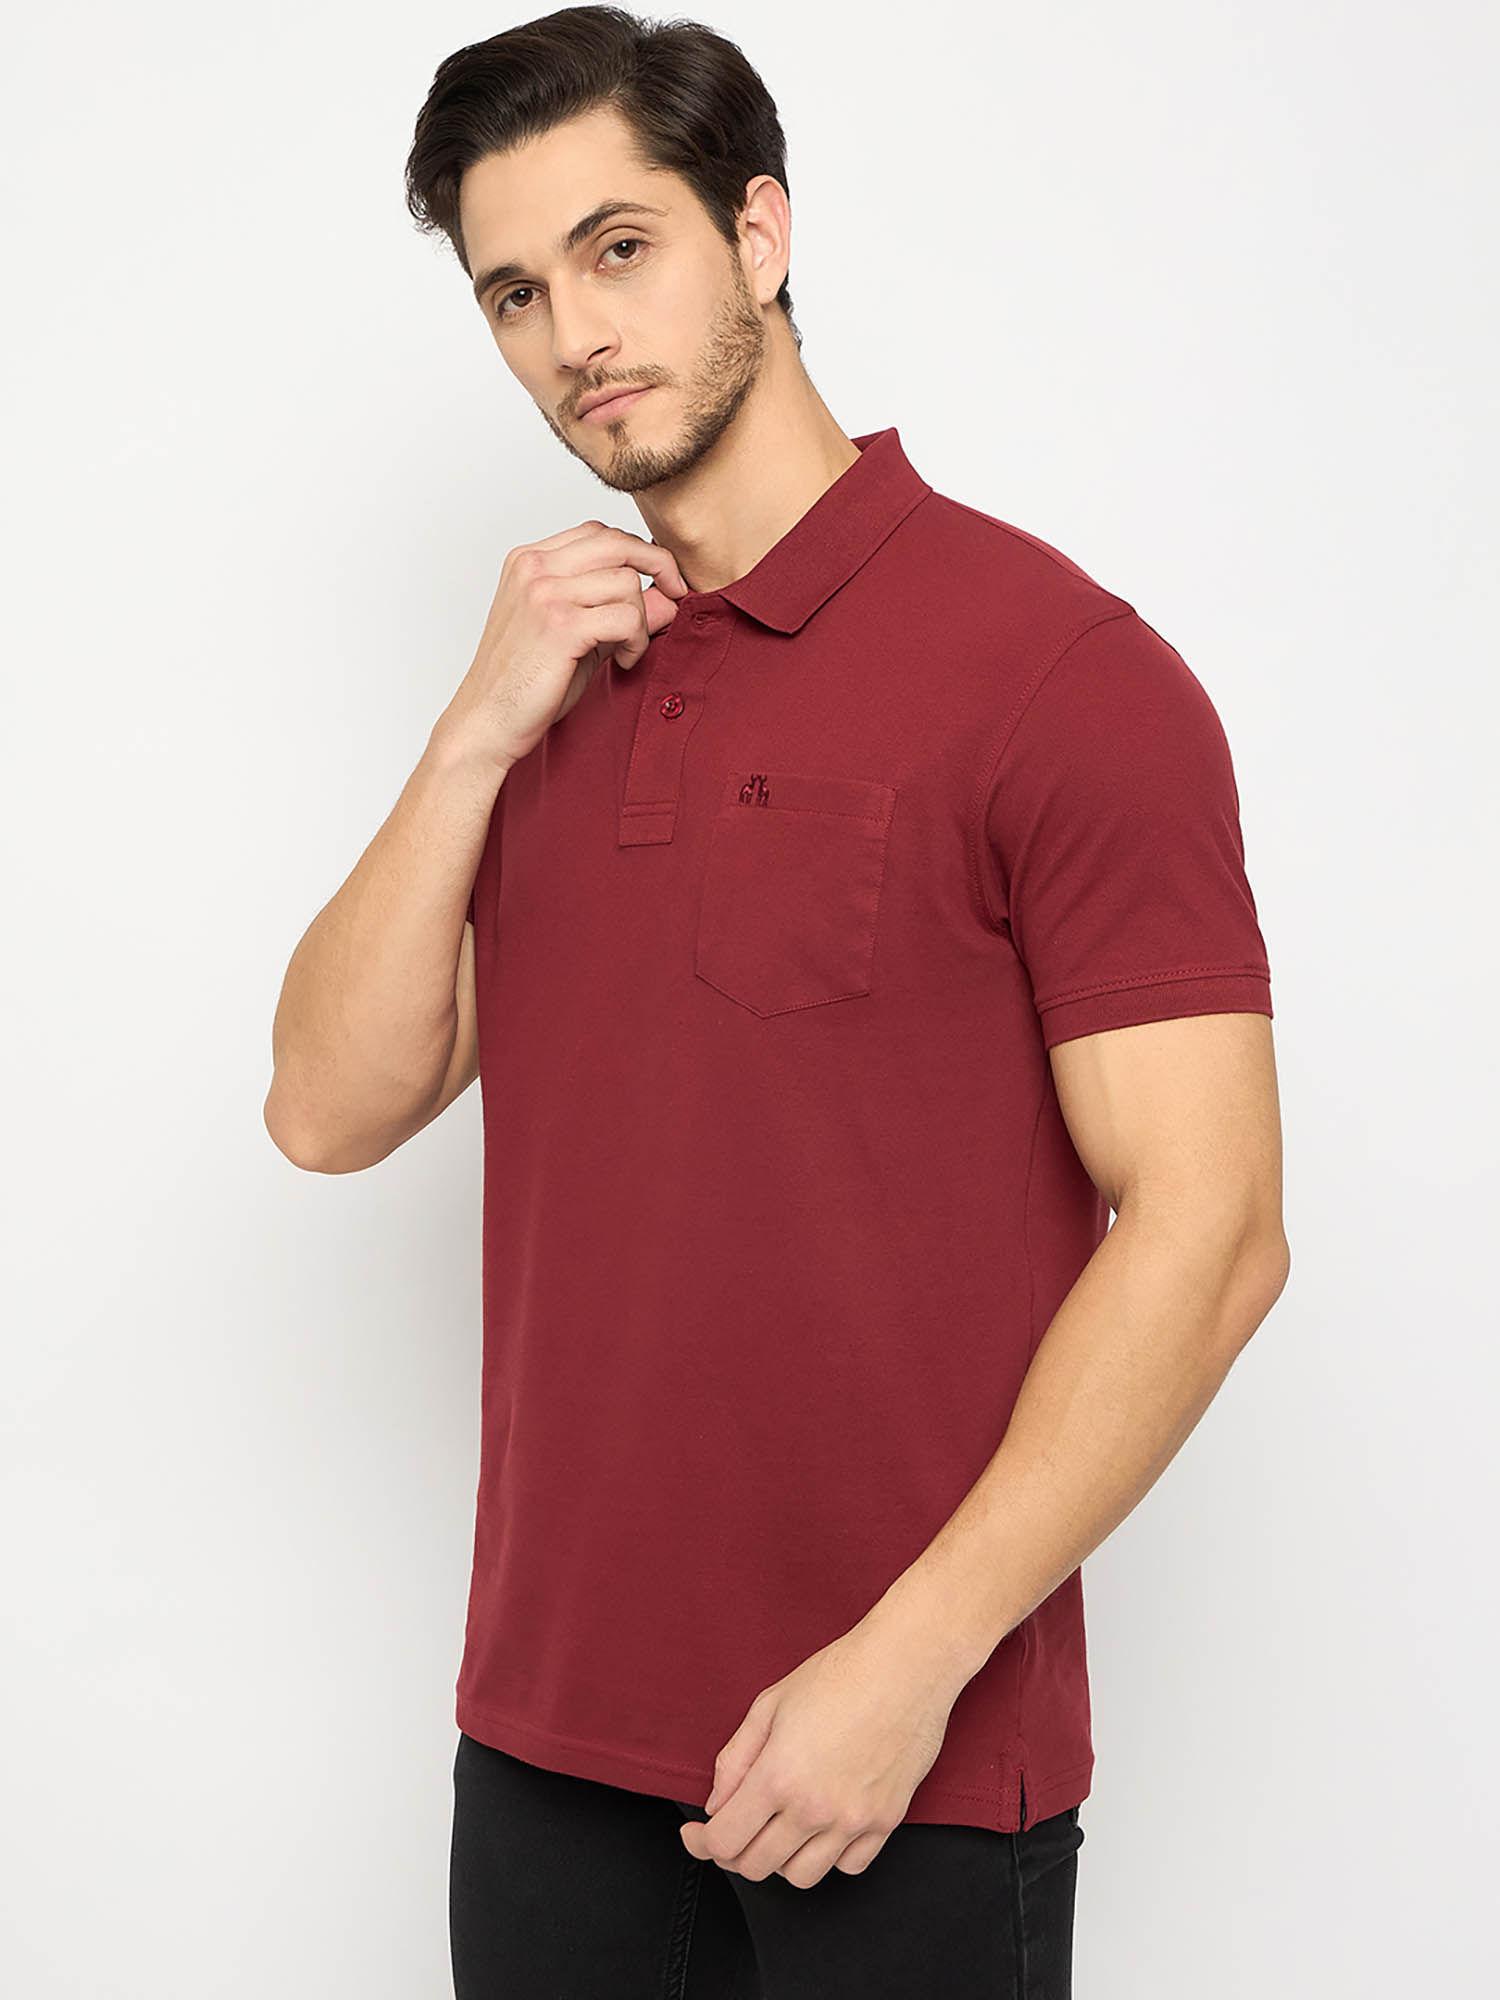 mens half sleeves maroon polo t-shirt